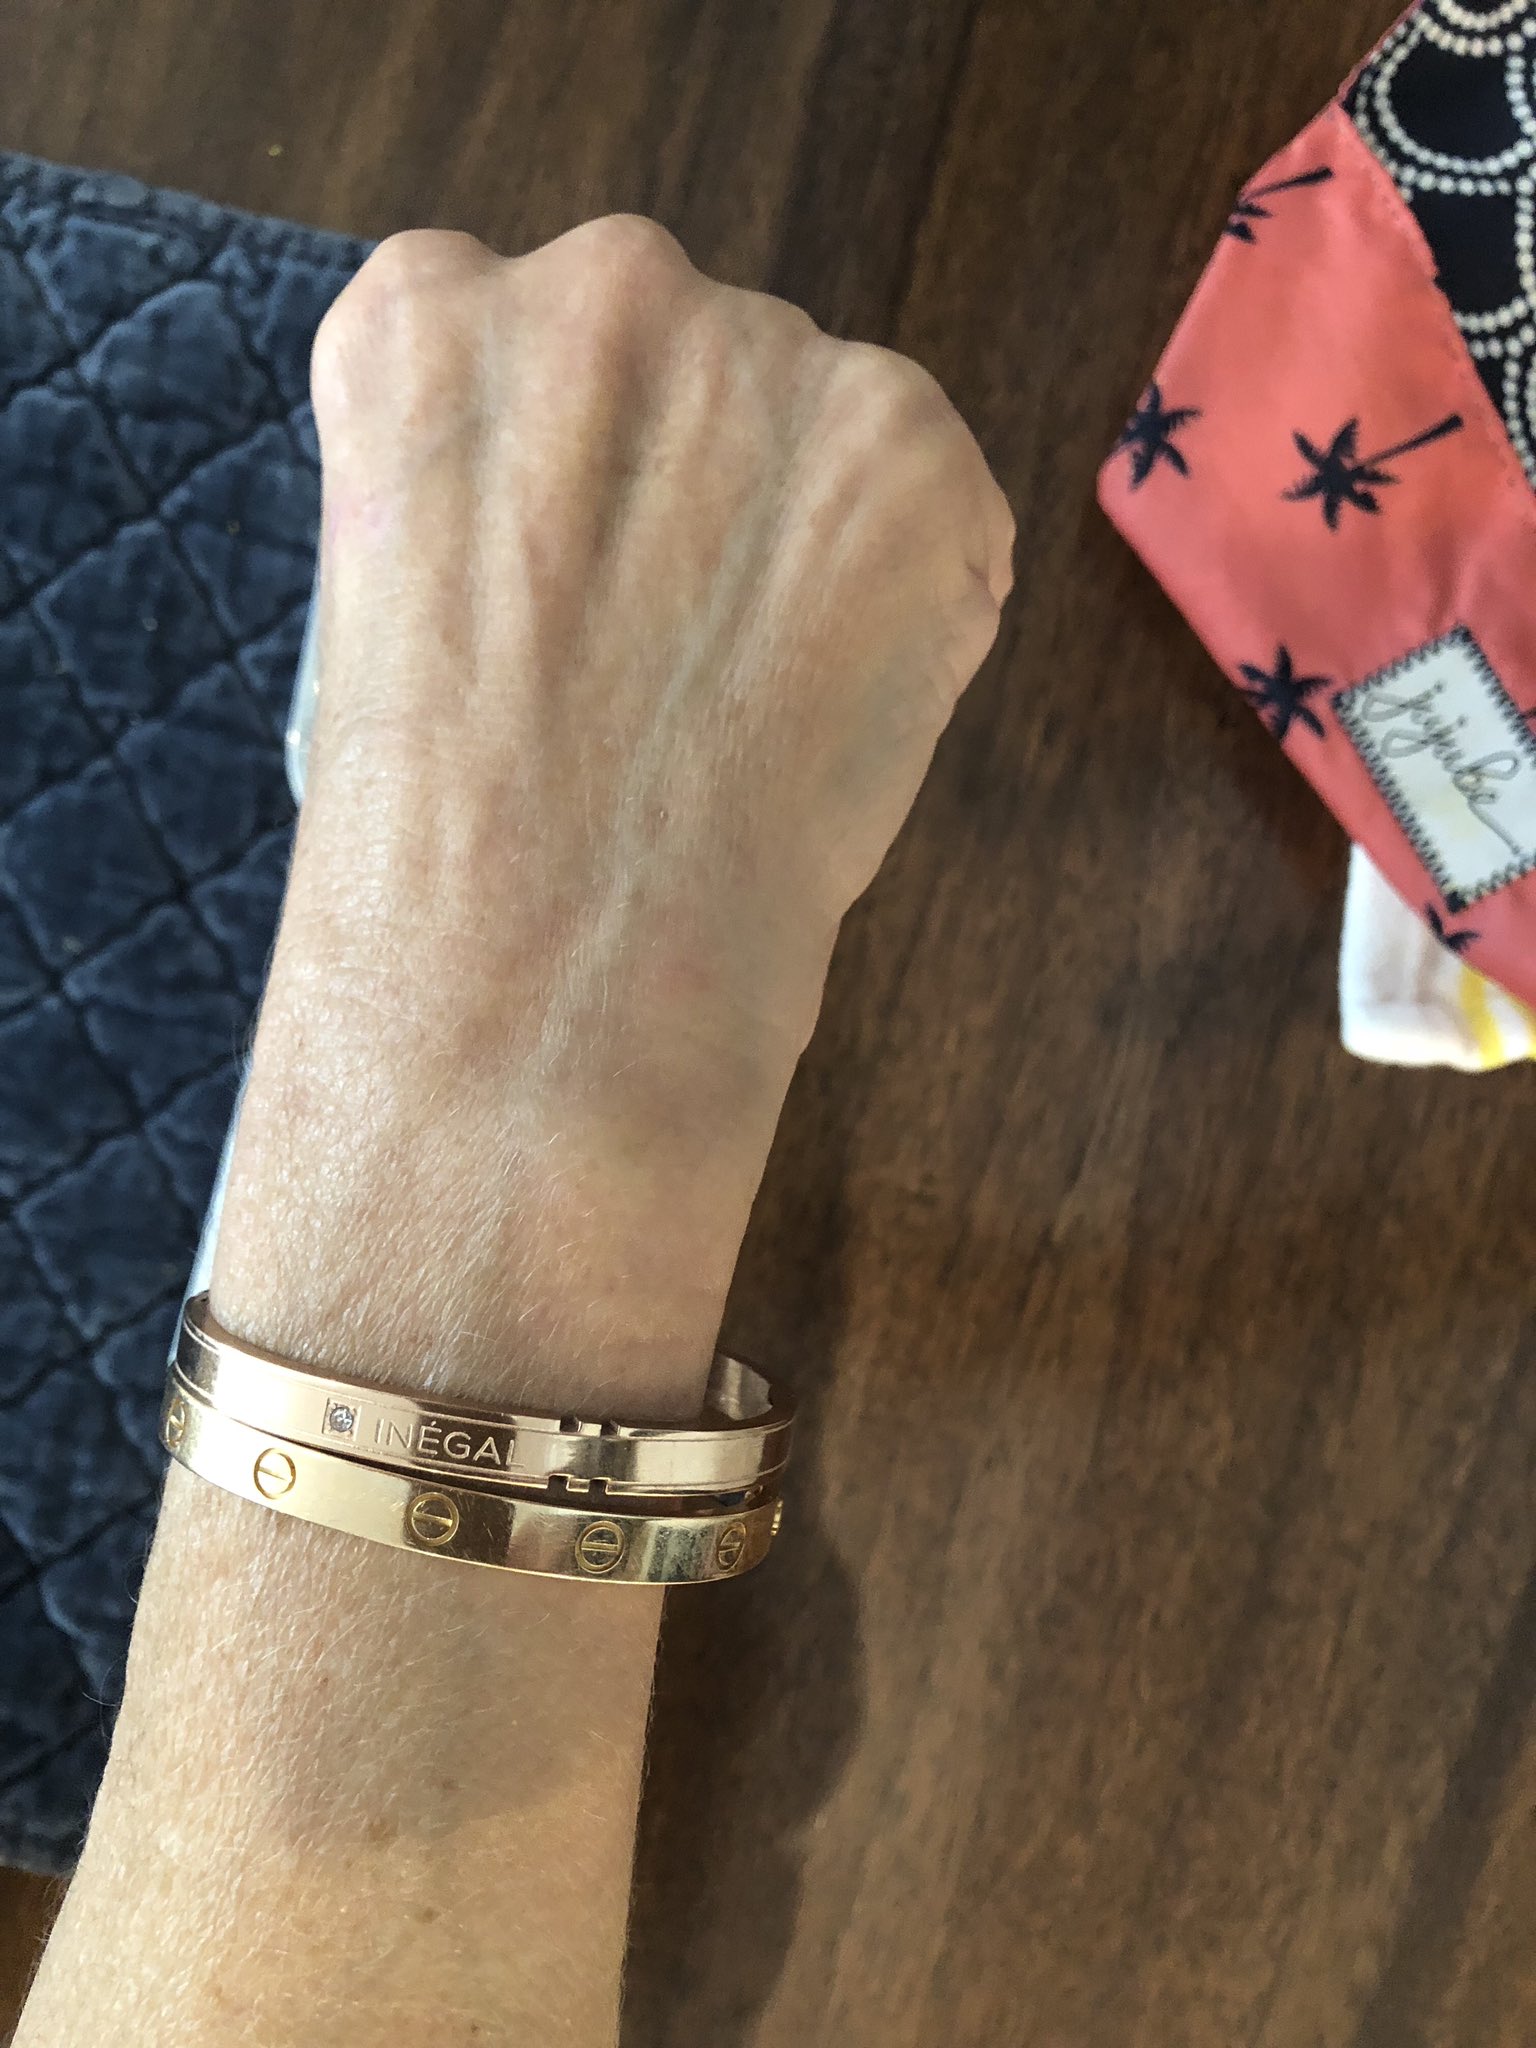 Personalized Gold Bar bracelet - Custom Name Bracelet - Engraved Bracelet -  Friendship Bracelet for Best Friend - Birthday Gift for Sister - Walmart.com